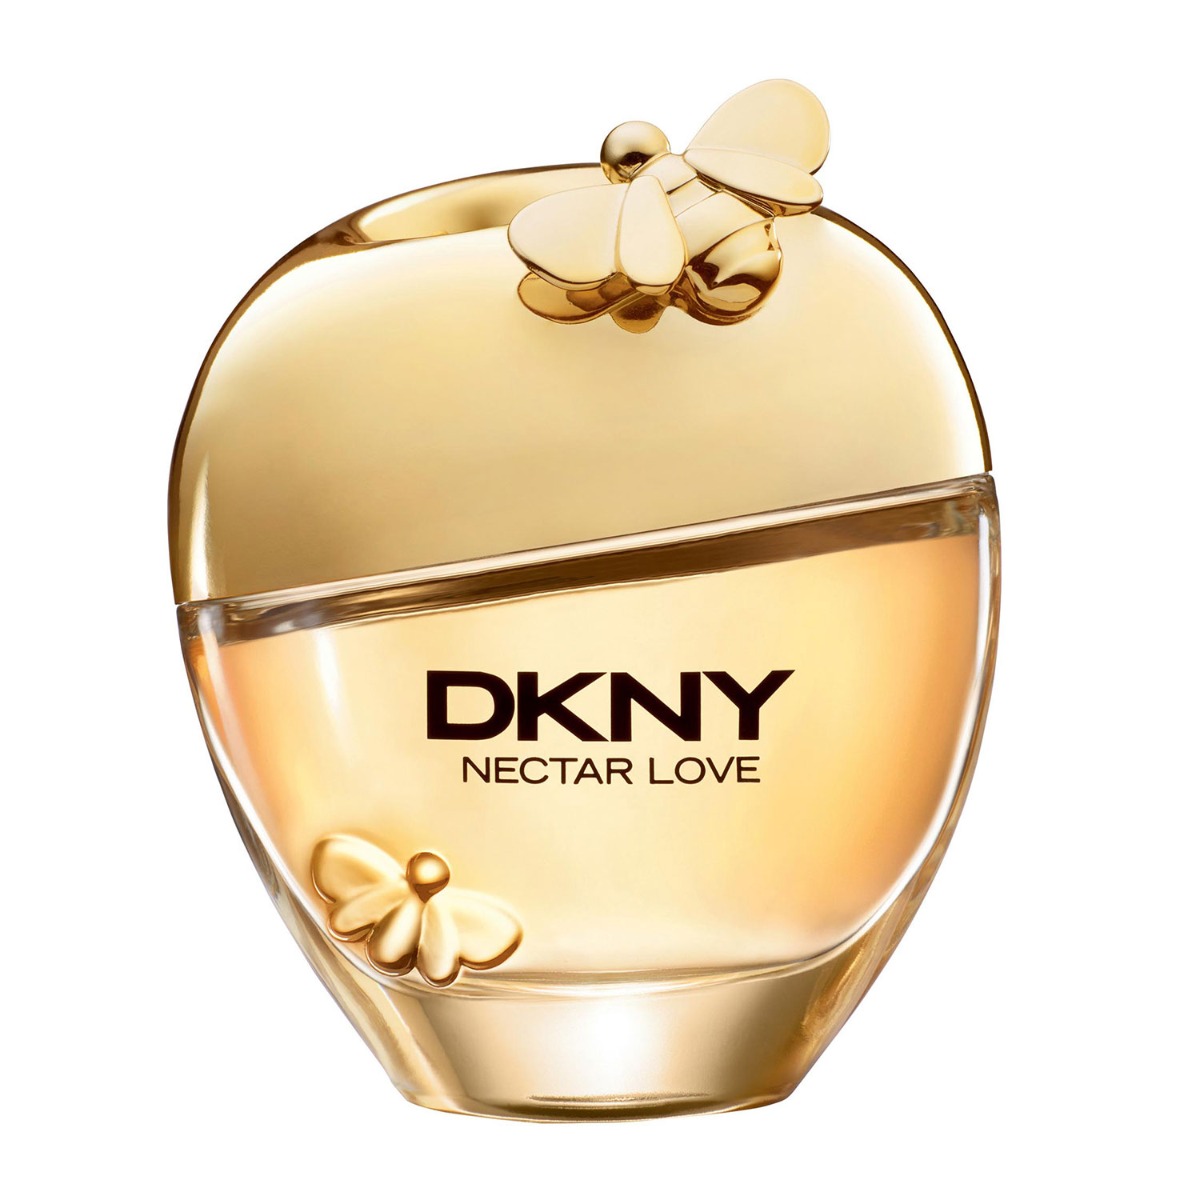 DKNY Nectar Love Eau de Toilette, 50ml